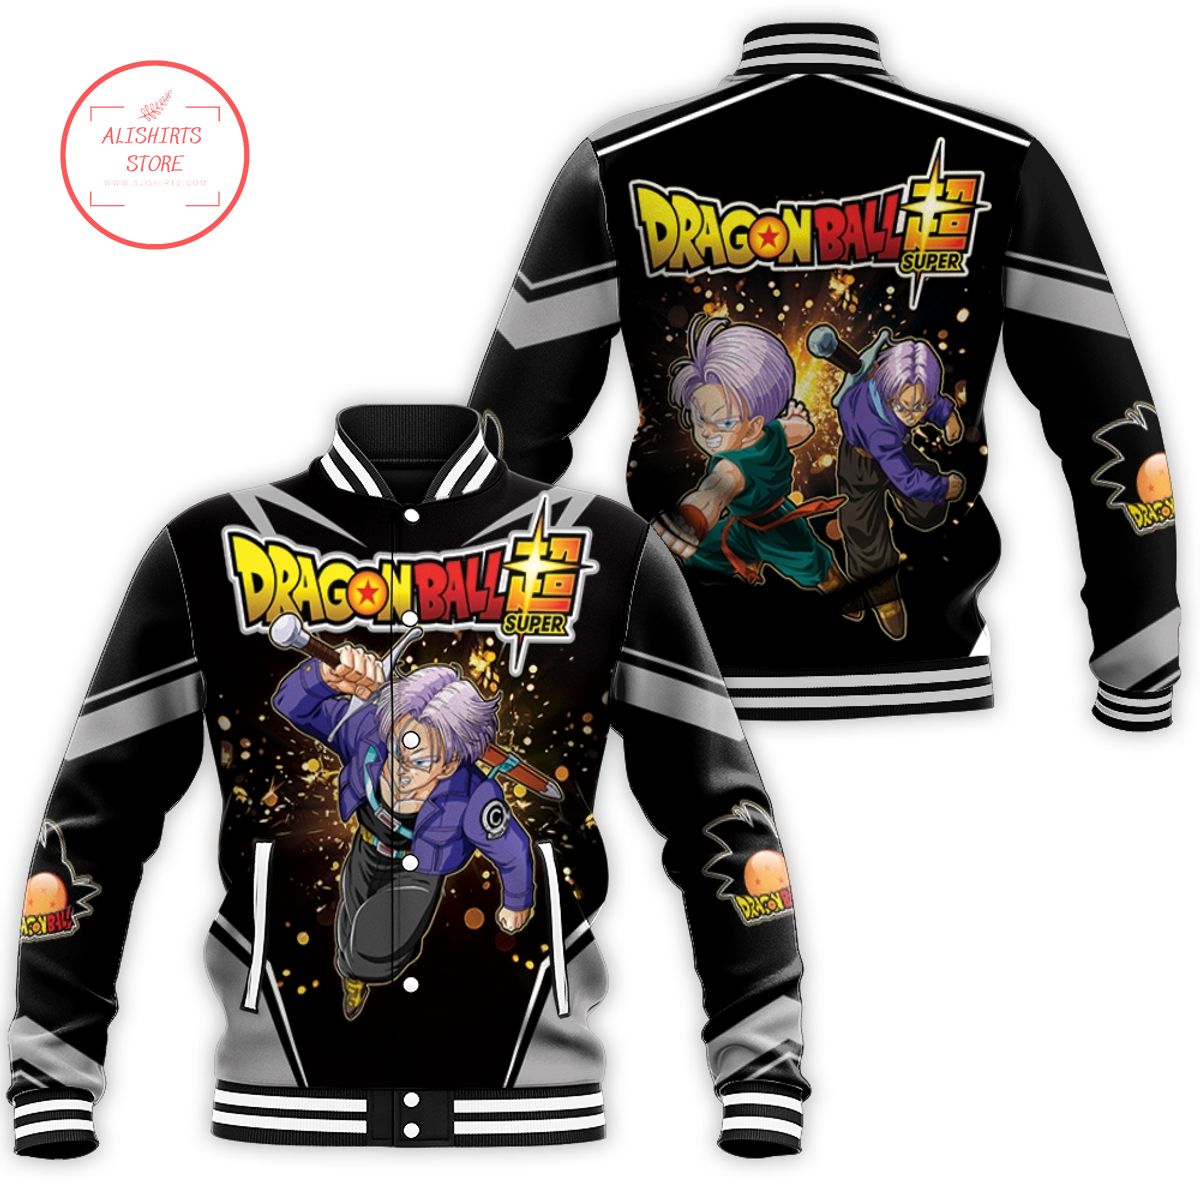 Trunks Future Saiyan Dragonball Super Dragon Balls Super varsity jacket